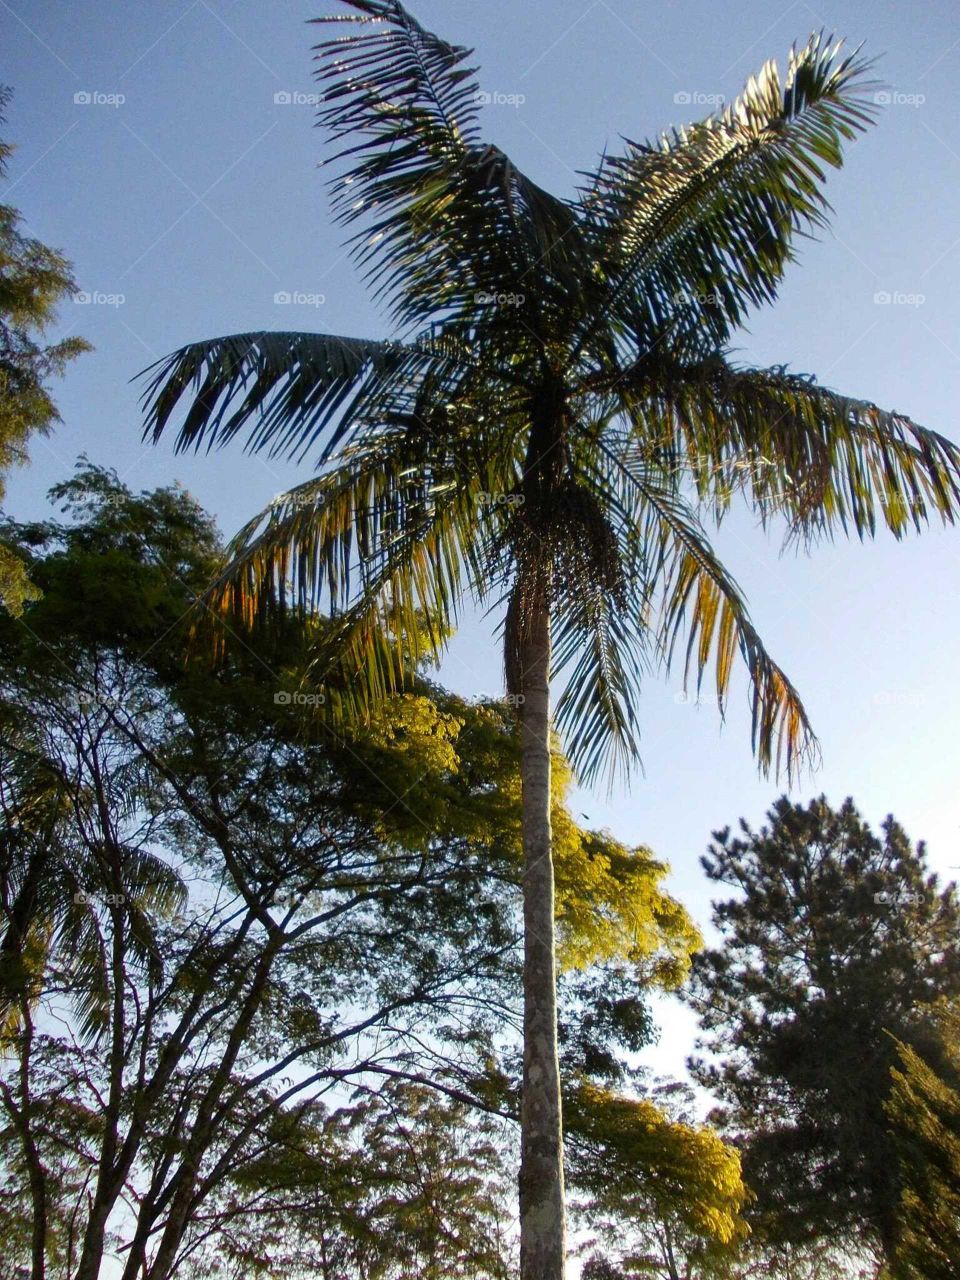 Brazilian palm